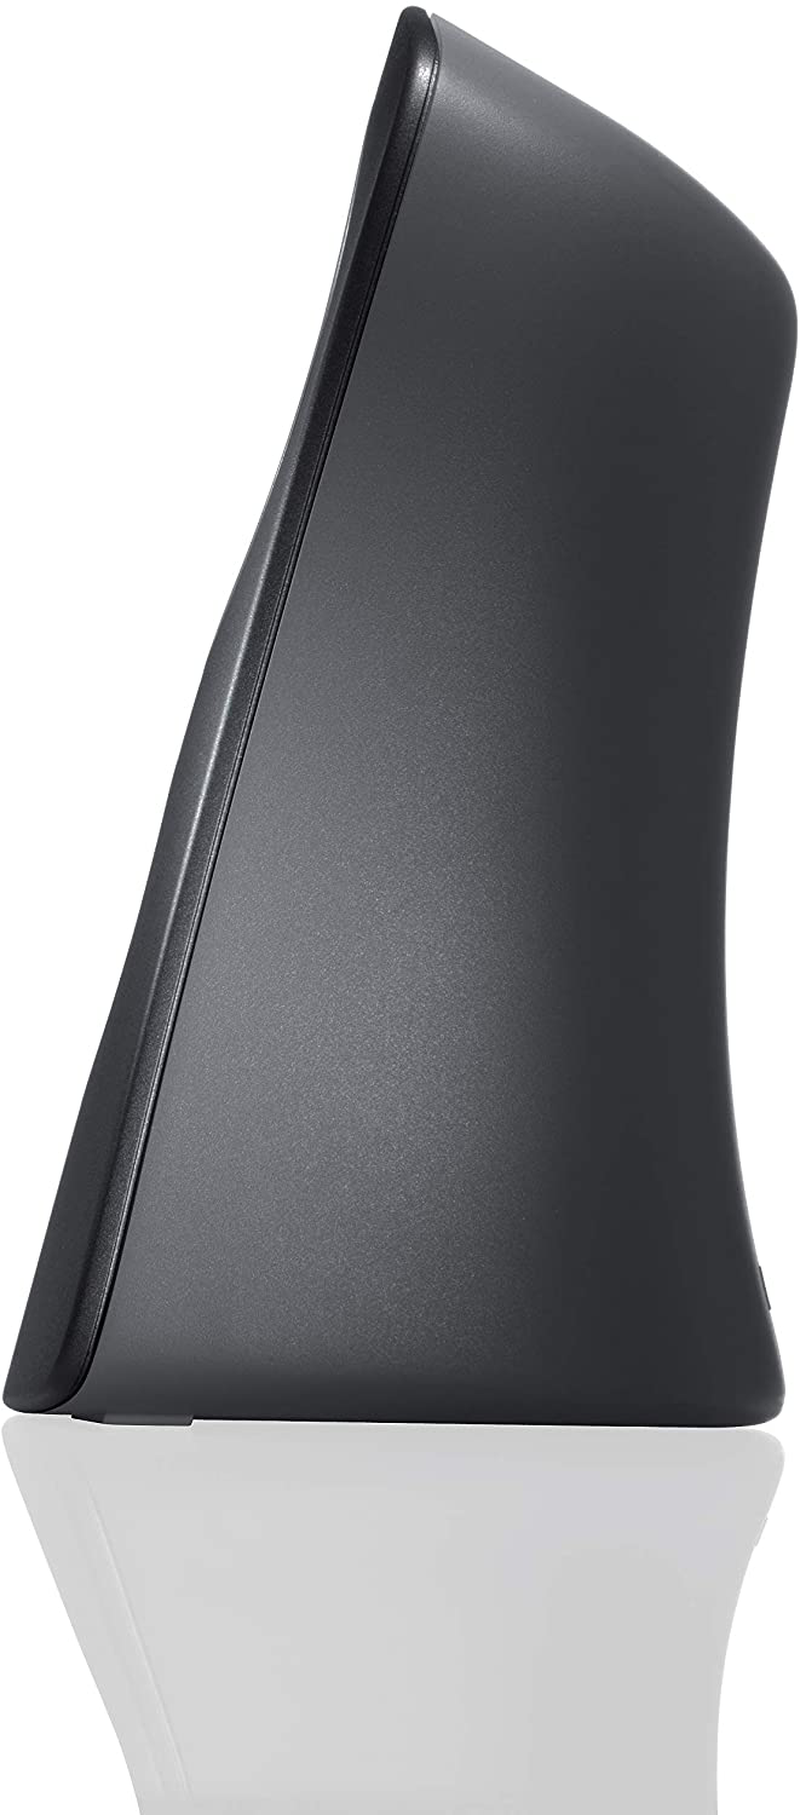 Logitech Z313 2.1 Multimedia Speaker System with Subwoofer, Full Range Audio, 50 Watts Peak Power, Strong Bass, 3.5Mm Audio Inputs, UK Plug, Pc/Ps4/Xbox/Tv/Smartphone/Tablet/Music Player - Black